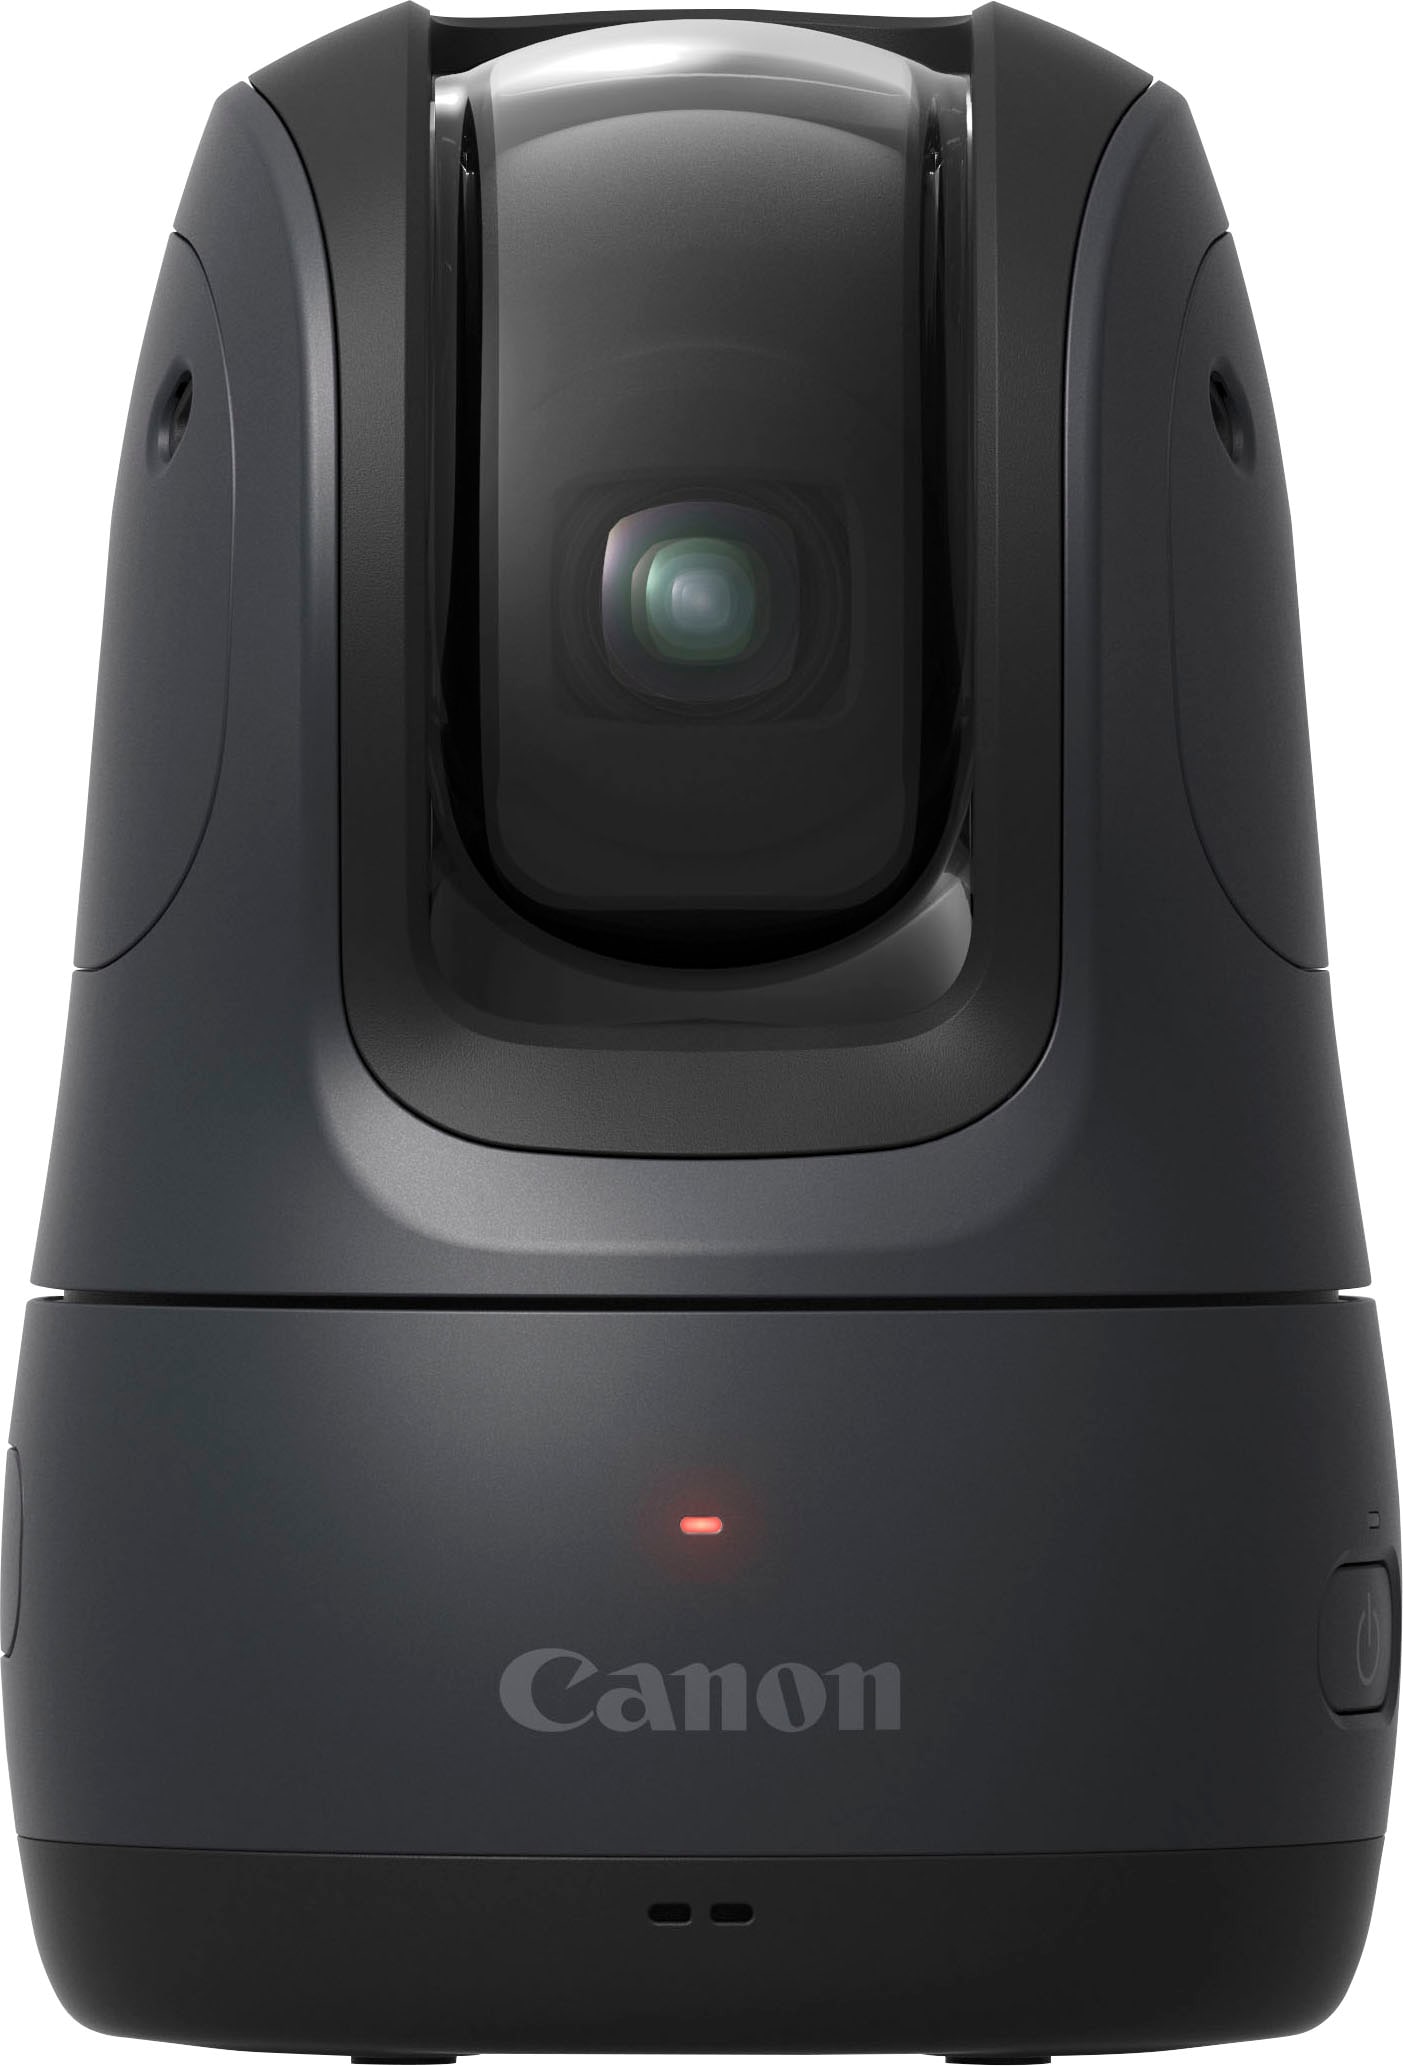 Canon Systemkamera »PowerShot PX Basis-Kit«, Schwenk- und neigbares Zoomobjektiv, 11,7 MP, 3 fachx opt. Zoom, WLAN-Bluetooth